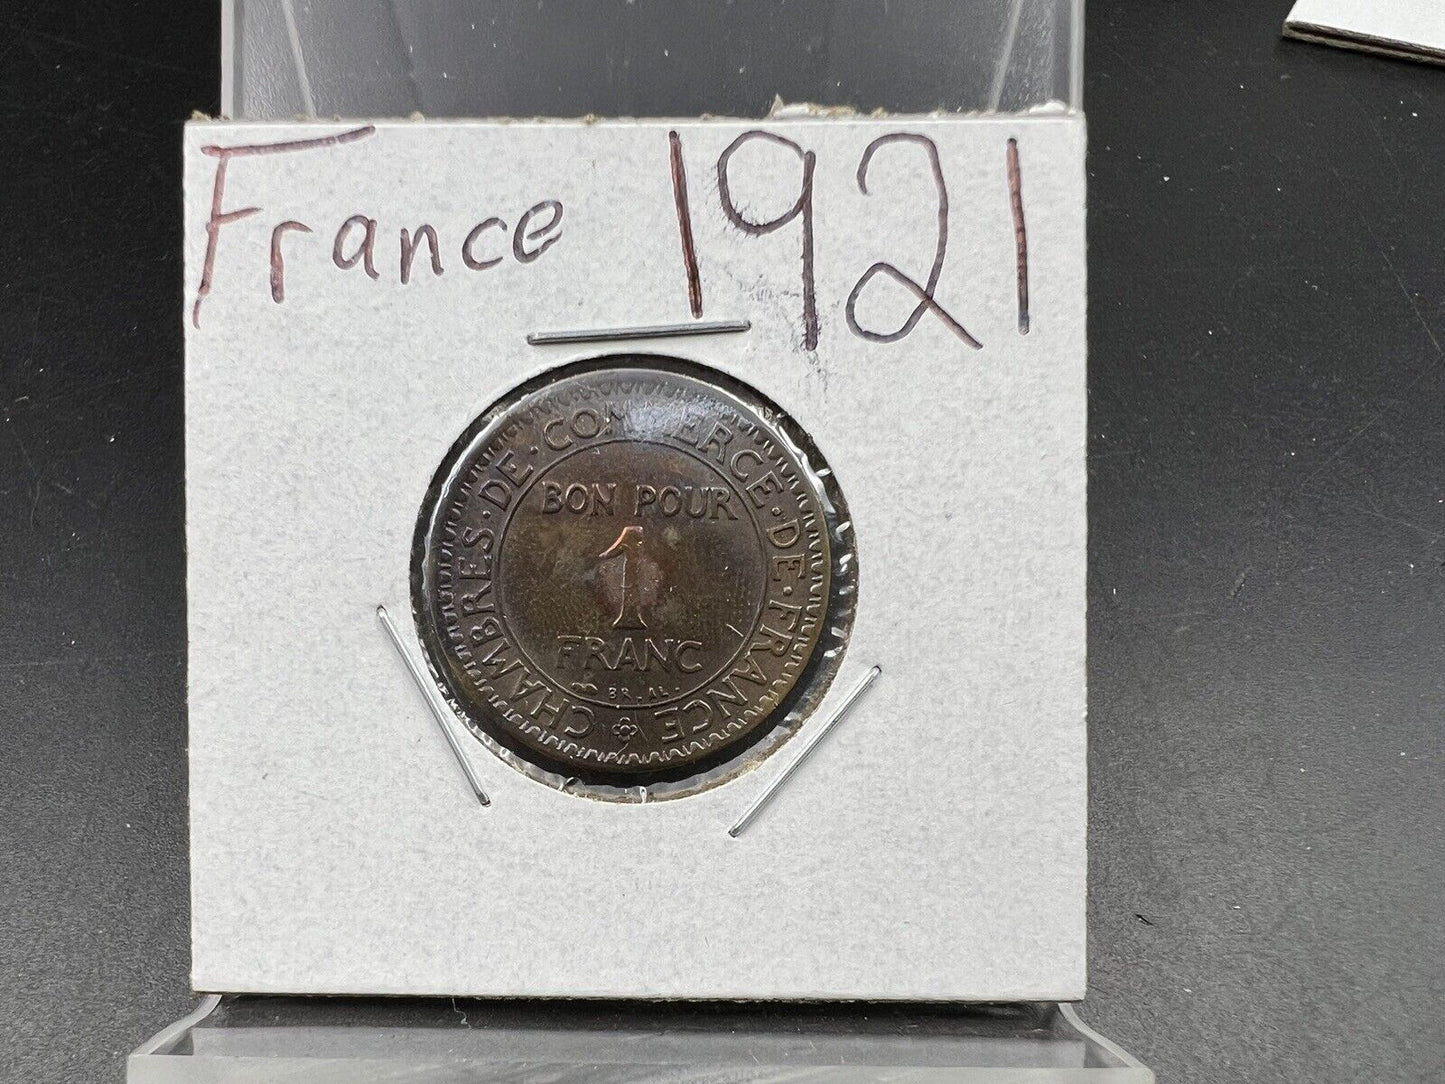 France 1921 One 1 Franc, Chamber of Commerce KM# 876 XF Neat Toning Toner